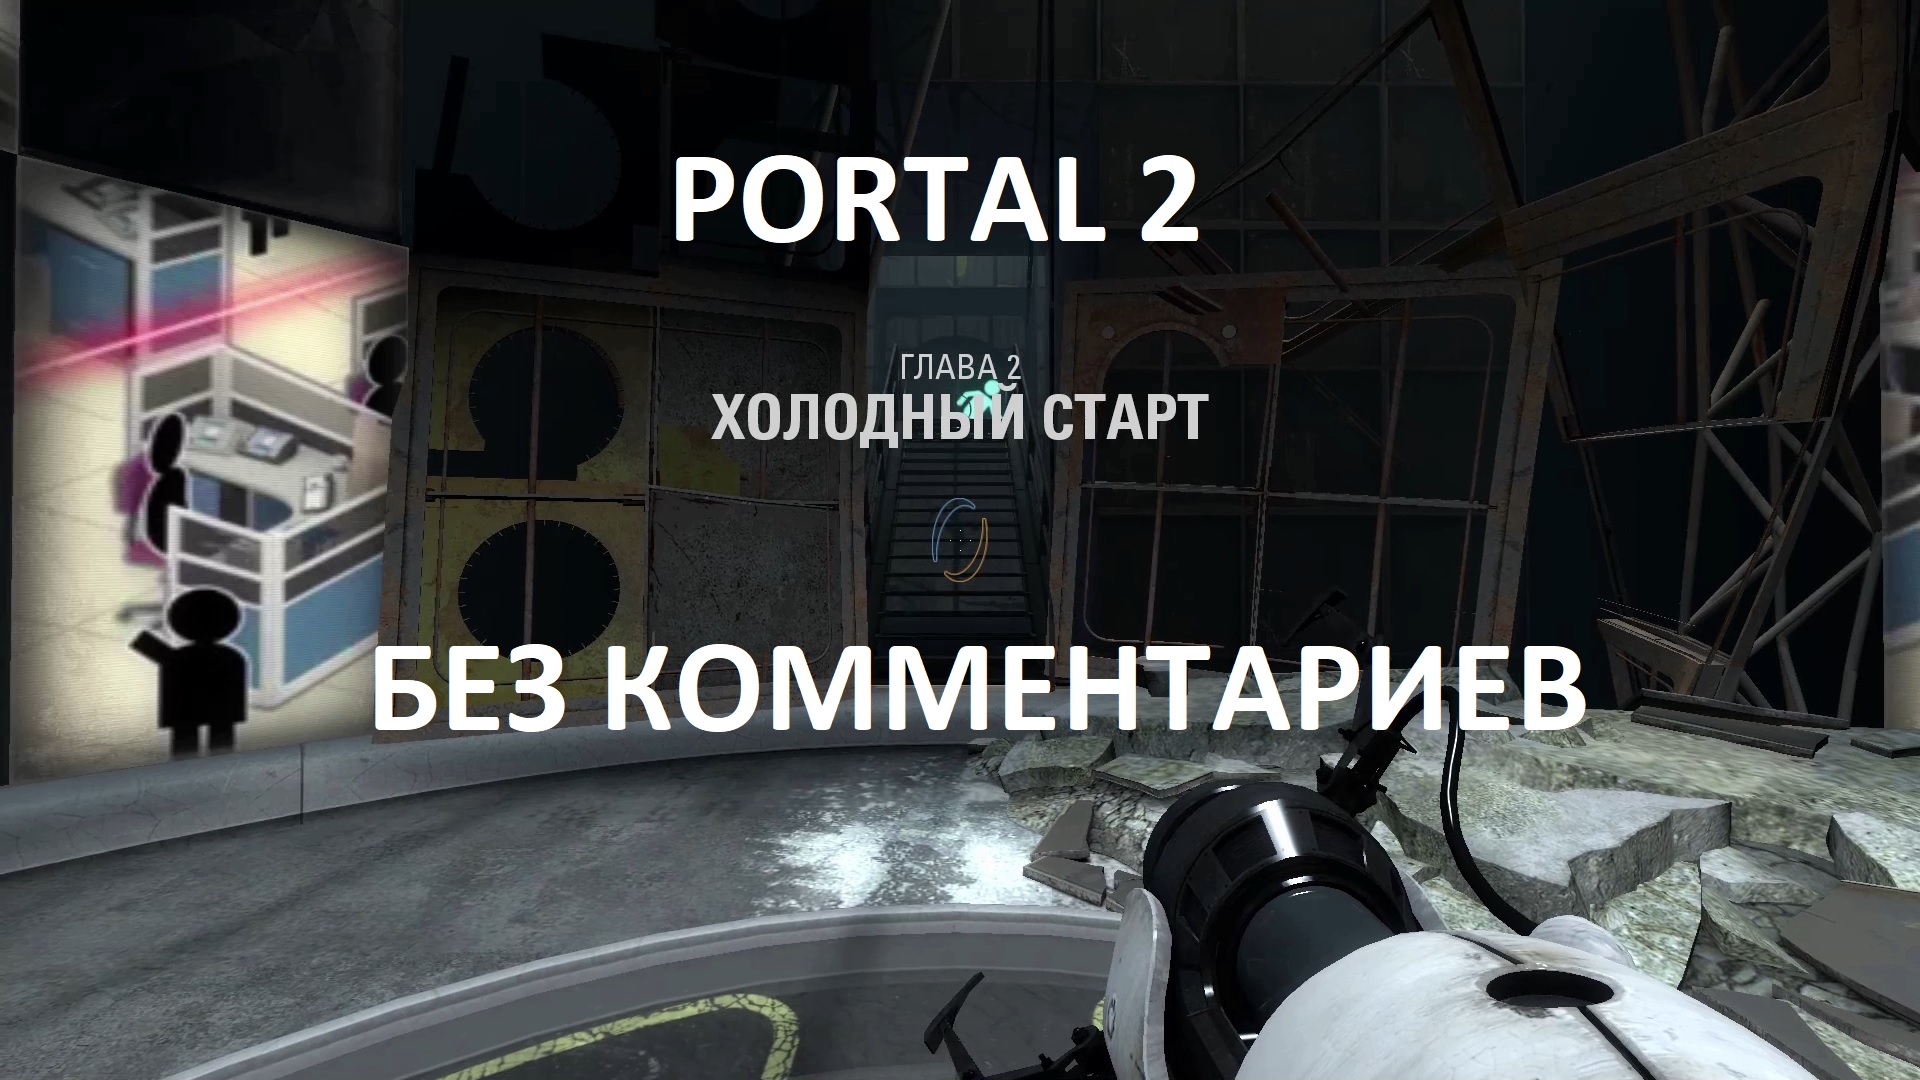 Portal 2 как пройти 6 уровень кооператив фото 58